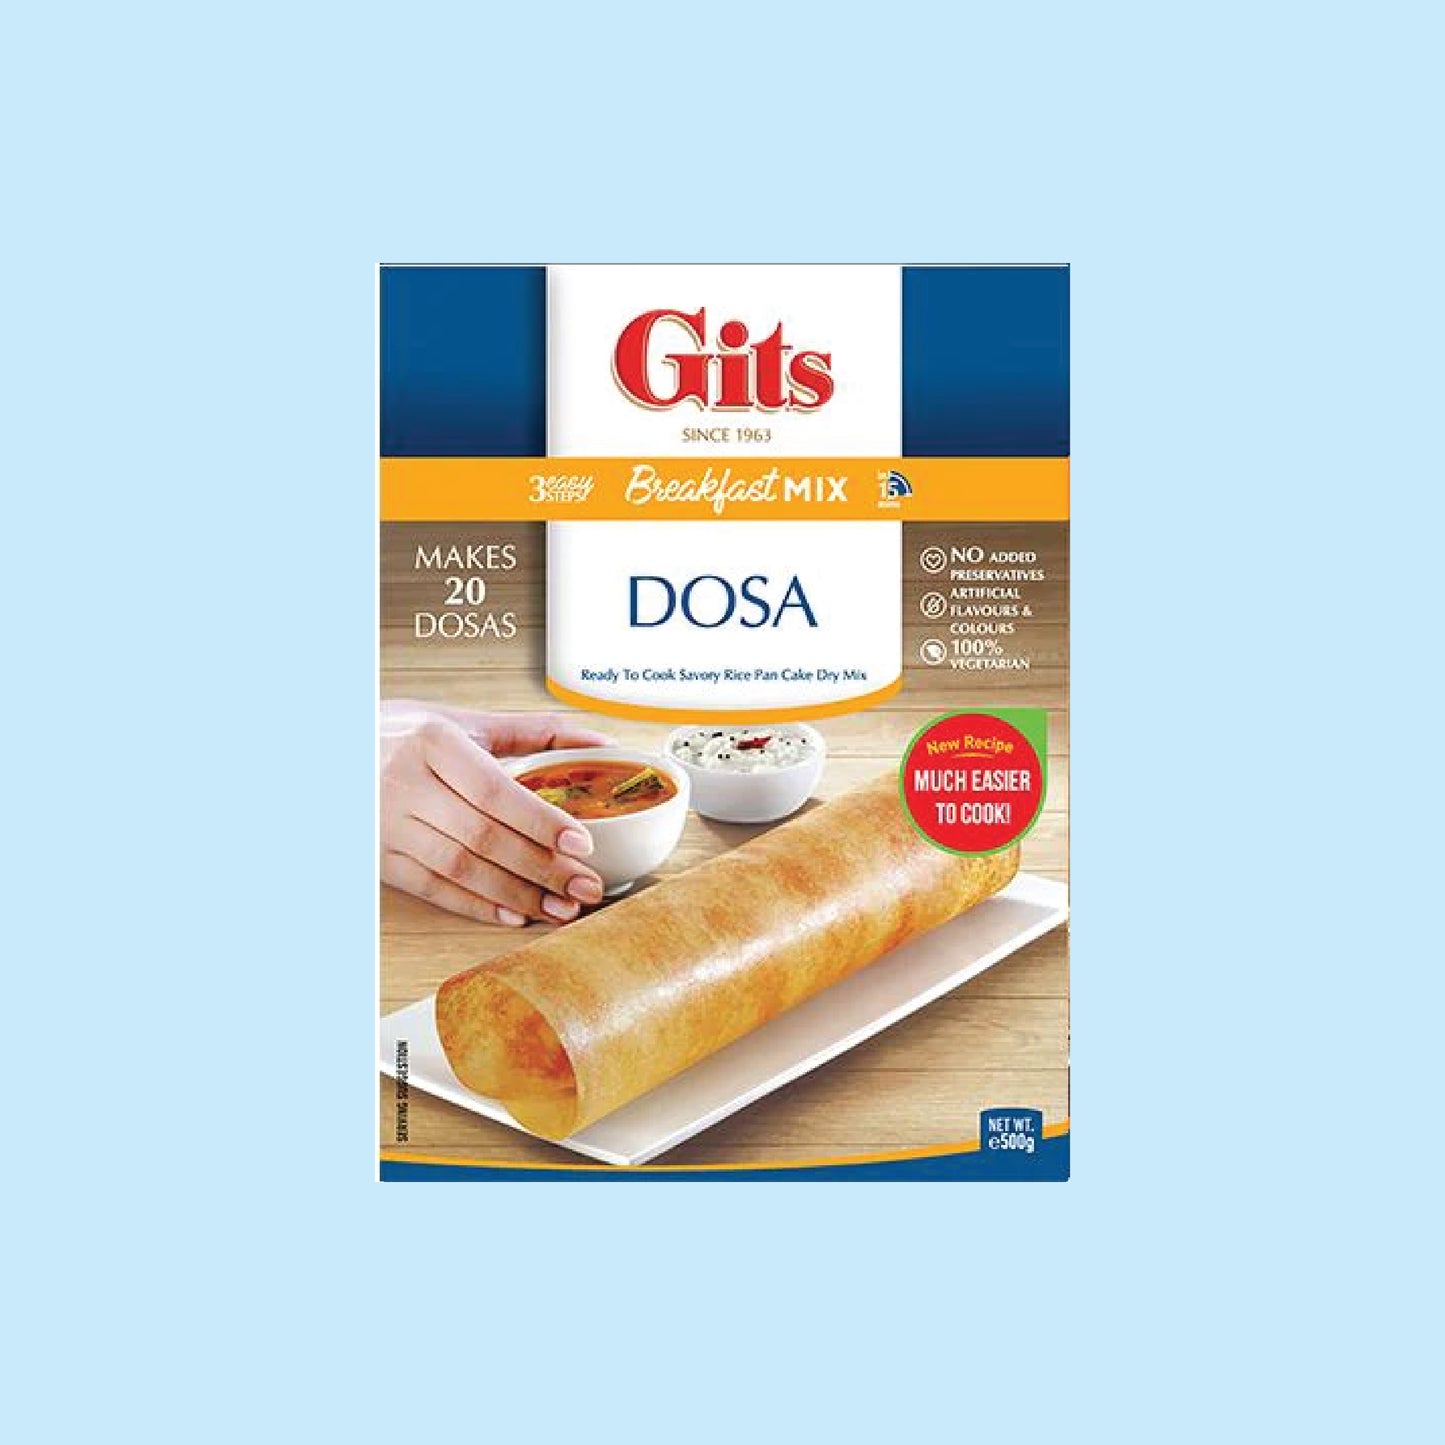 Gits Dosa Mix 500g